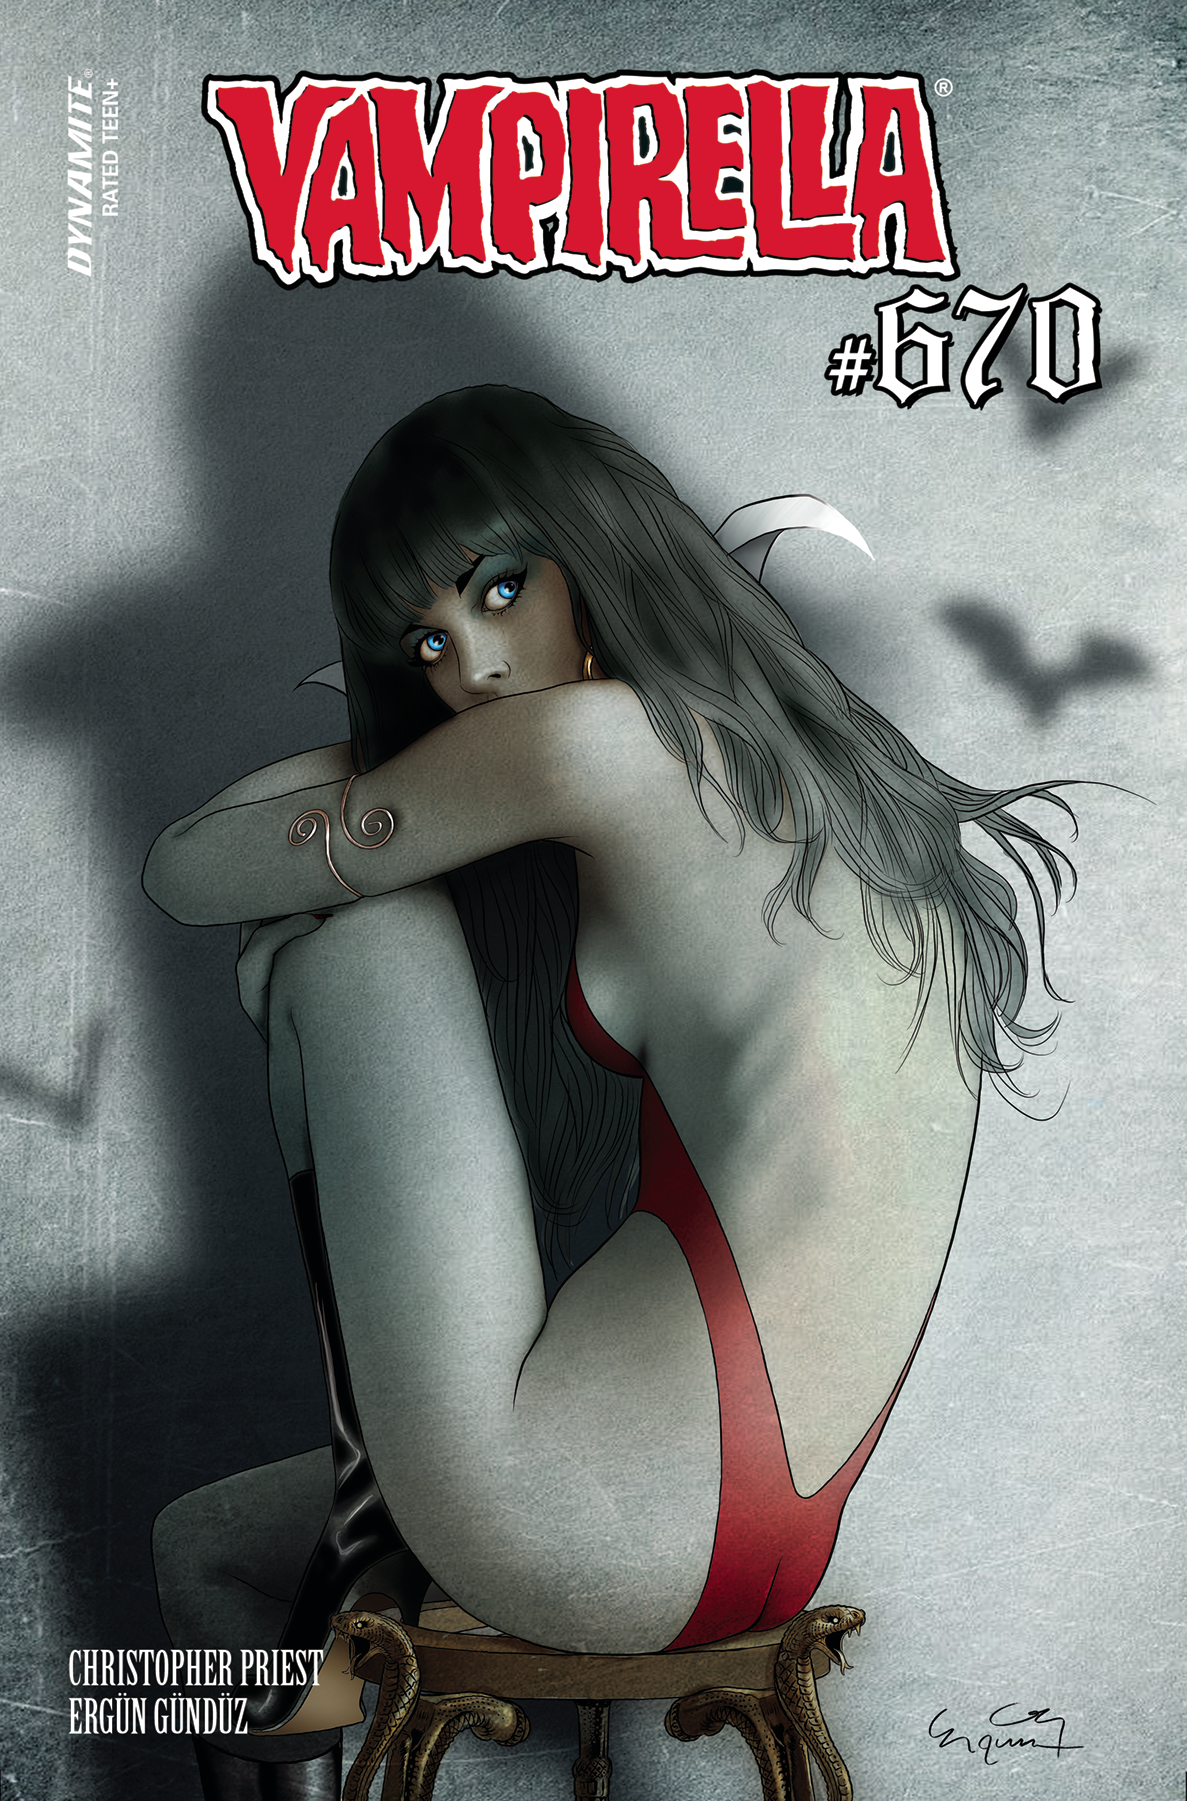 Vampirella #670 Cover F 7 Copy Incentive Gunduz Original